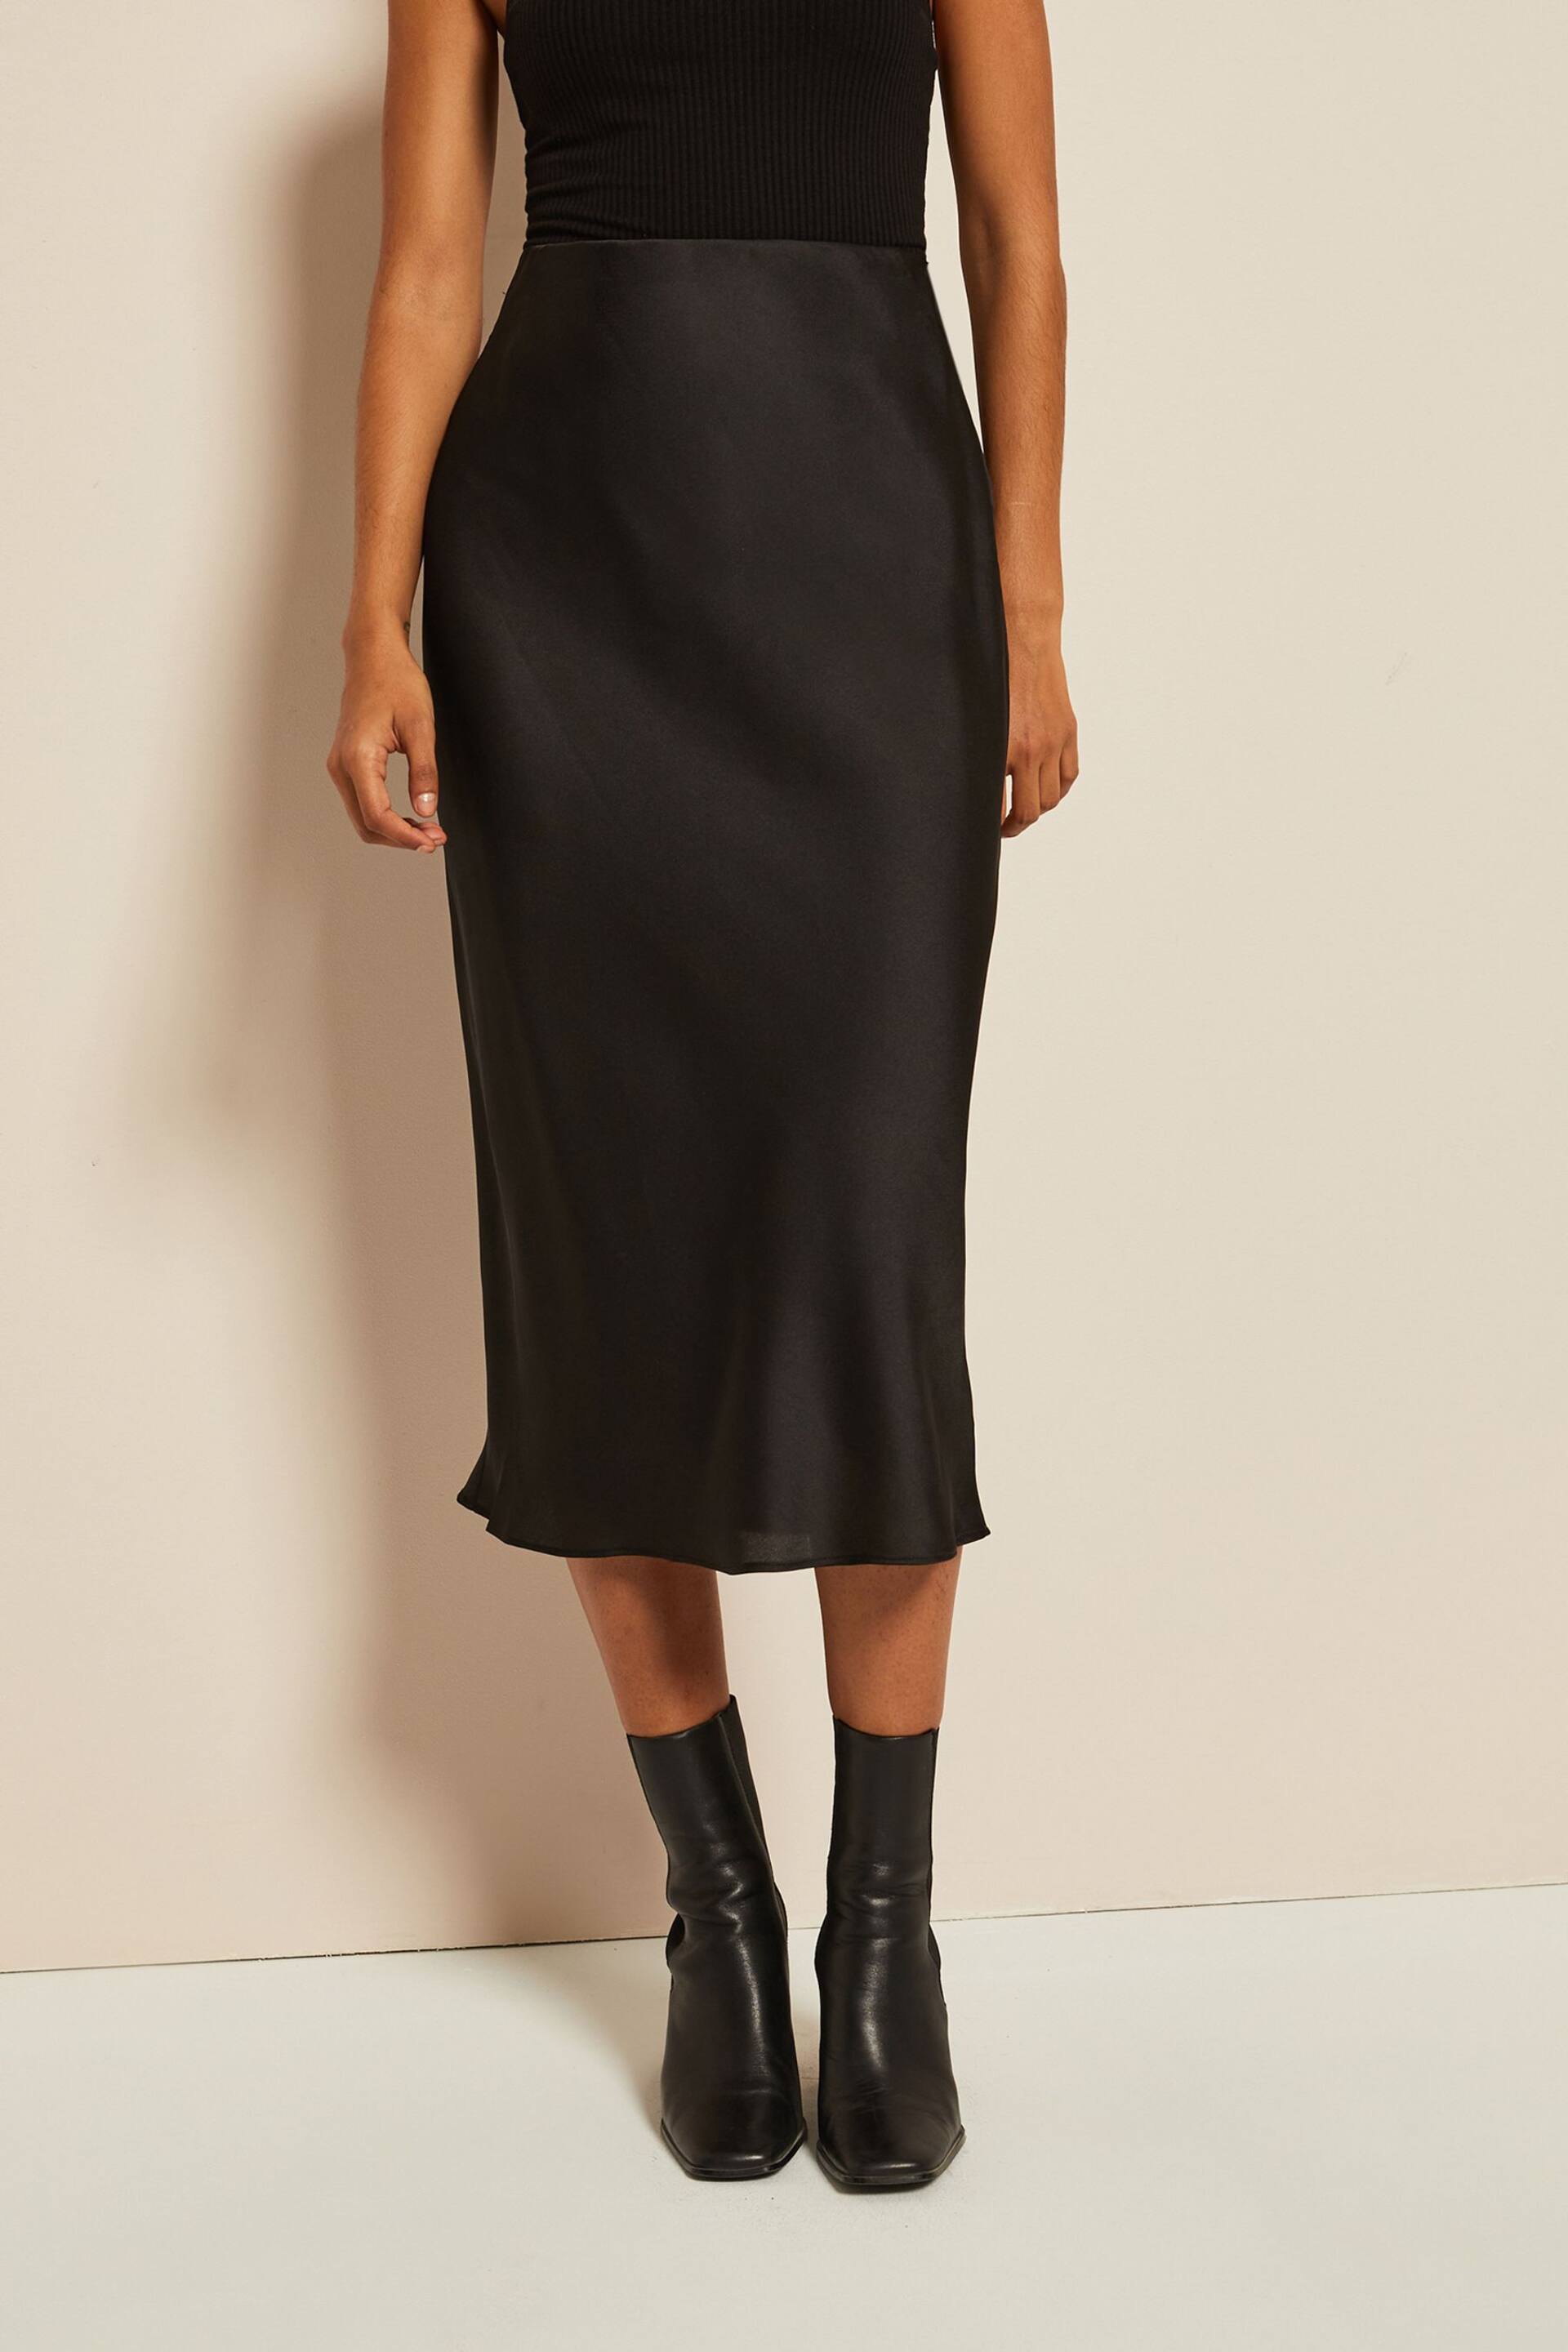 Friends Like These Black Satin Bias Midi Skirt - Image 1 of 4